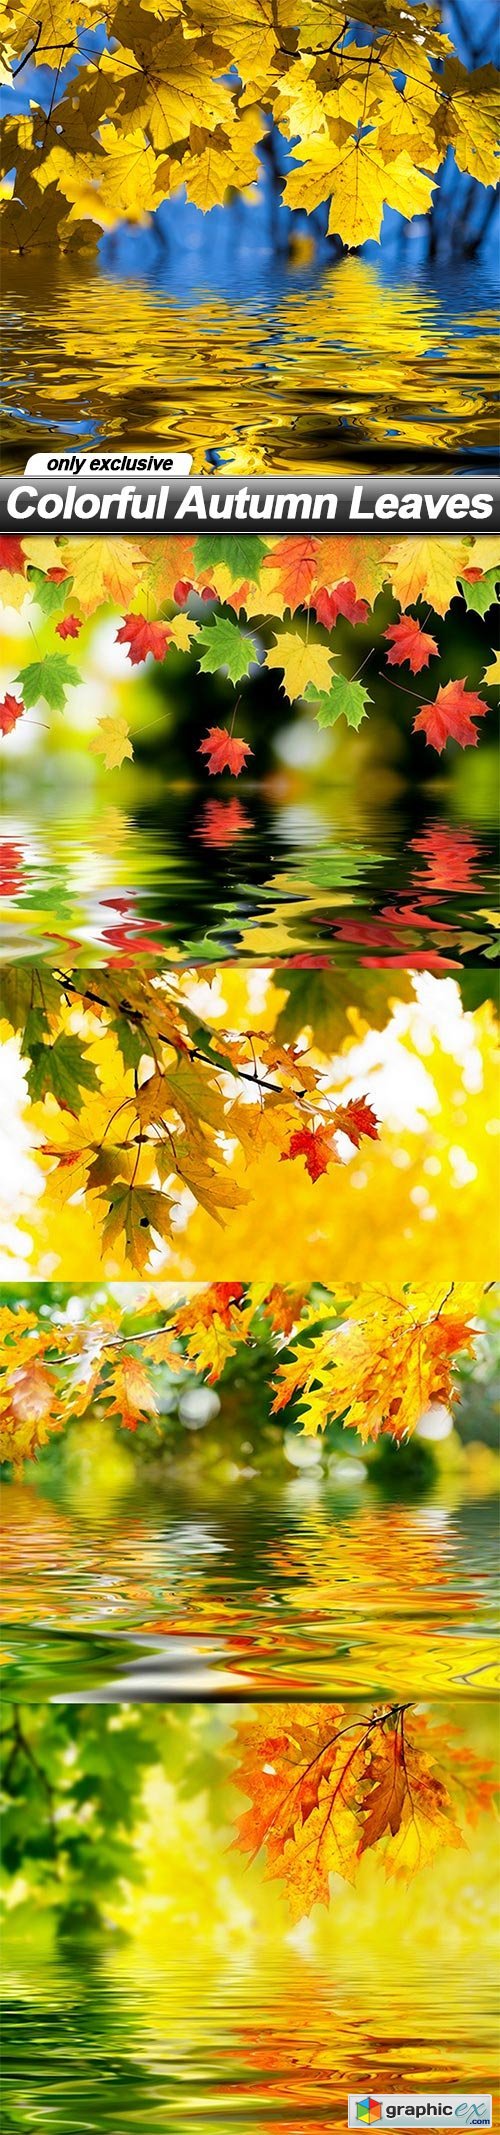 Colorful Autumn Leaves - 5 UHQ JPEG